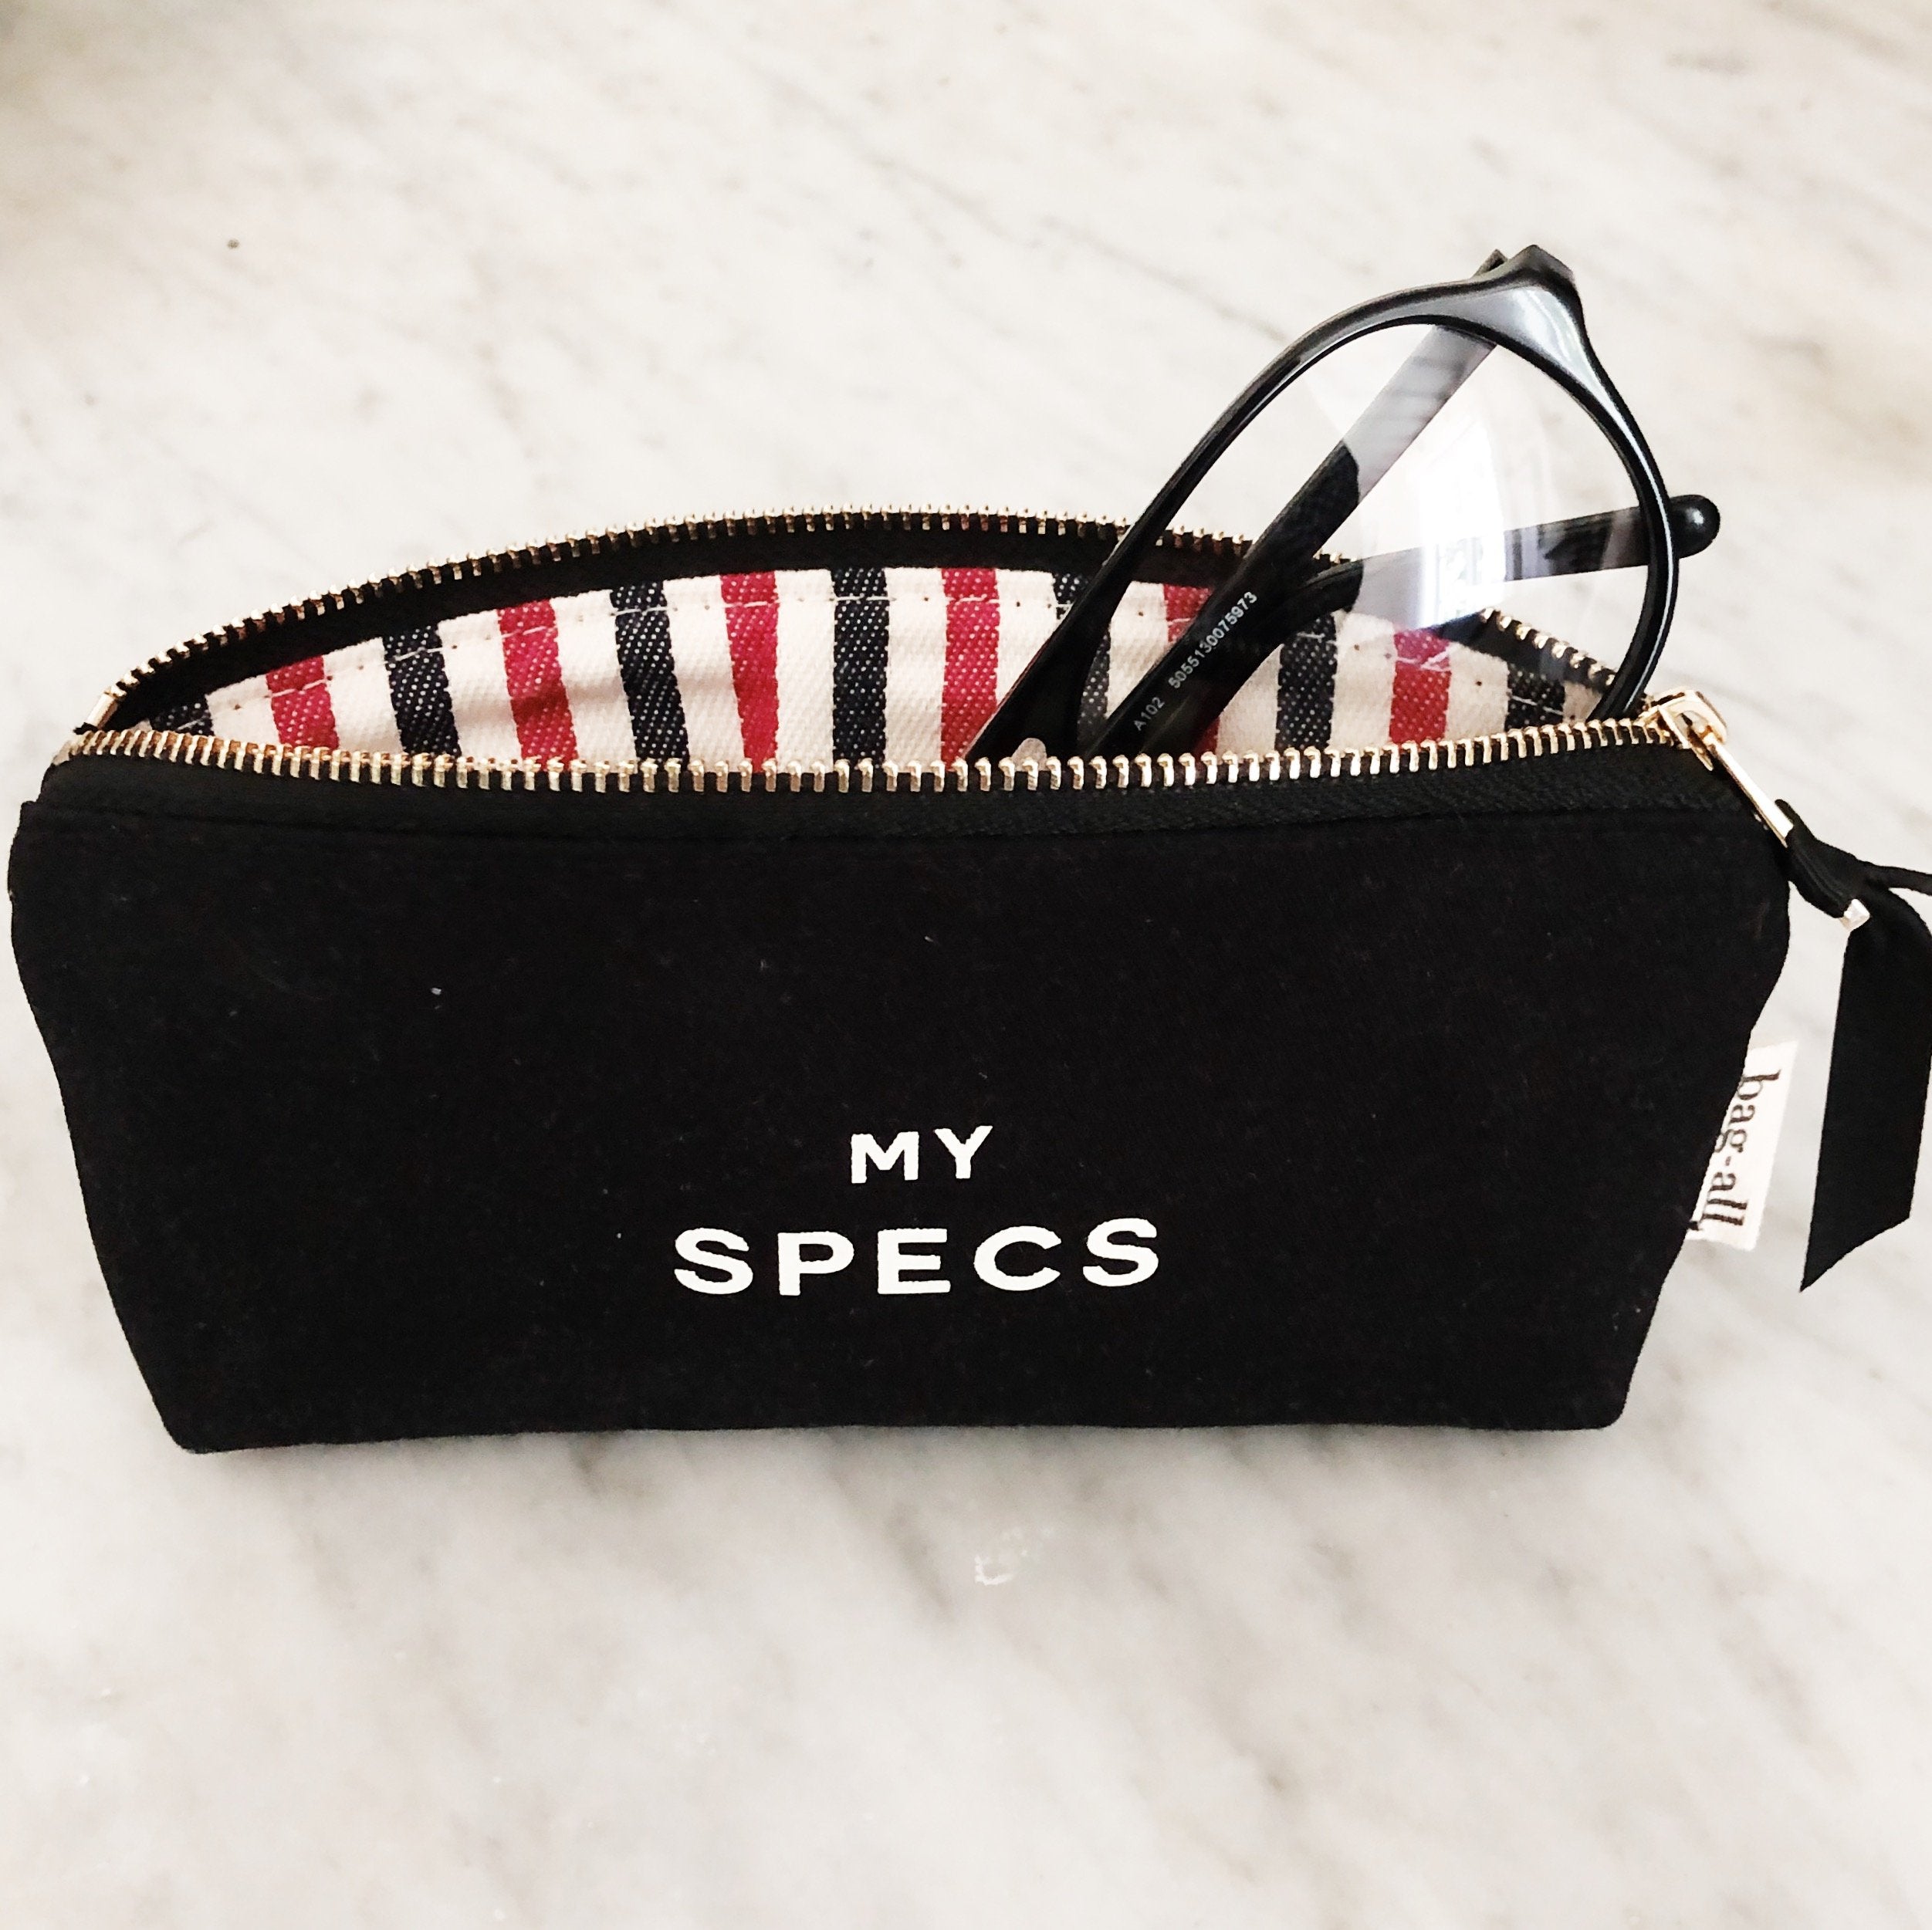 Specs Black Glasses Case - Bag-all Paris